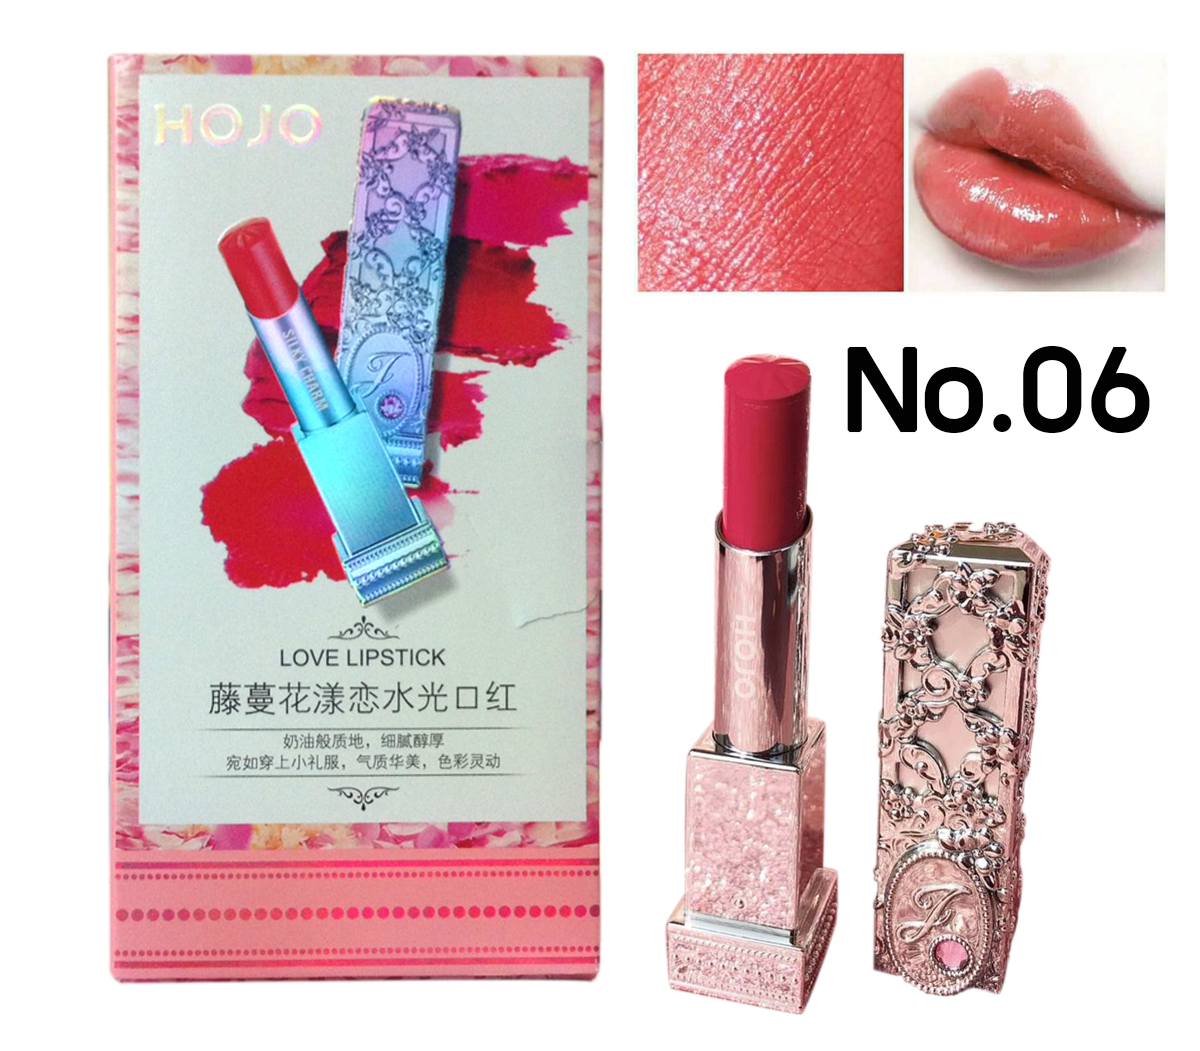 Hojo love lipstick ลิปสติกเนื้อชิฟฟ่อน No.06 ราคาส่งถูกๆ W.65 รหัส L104